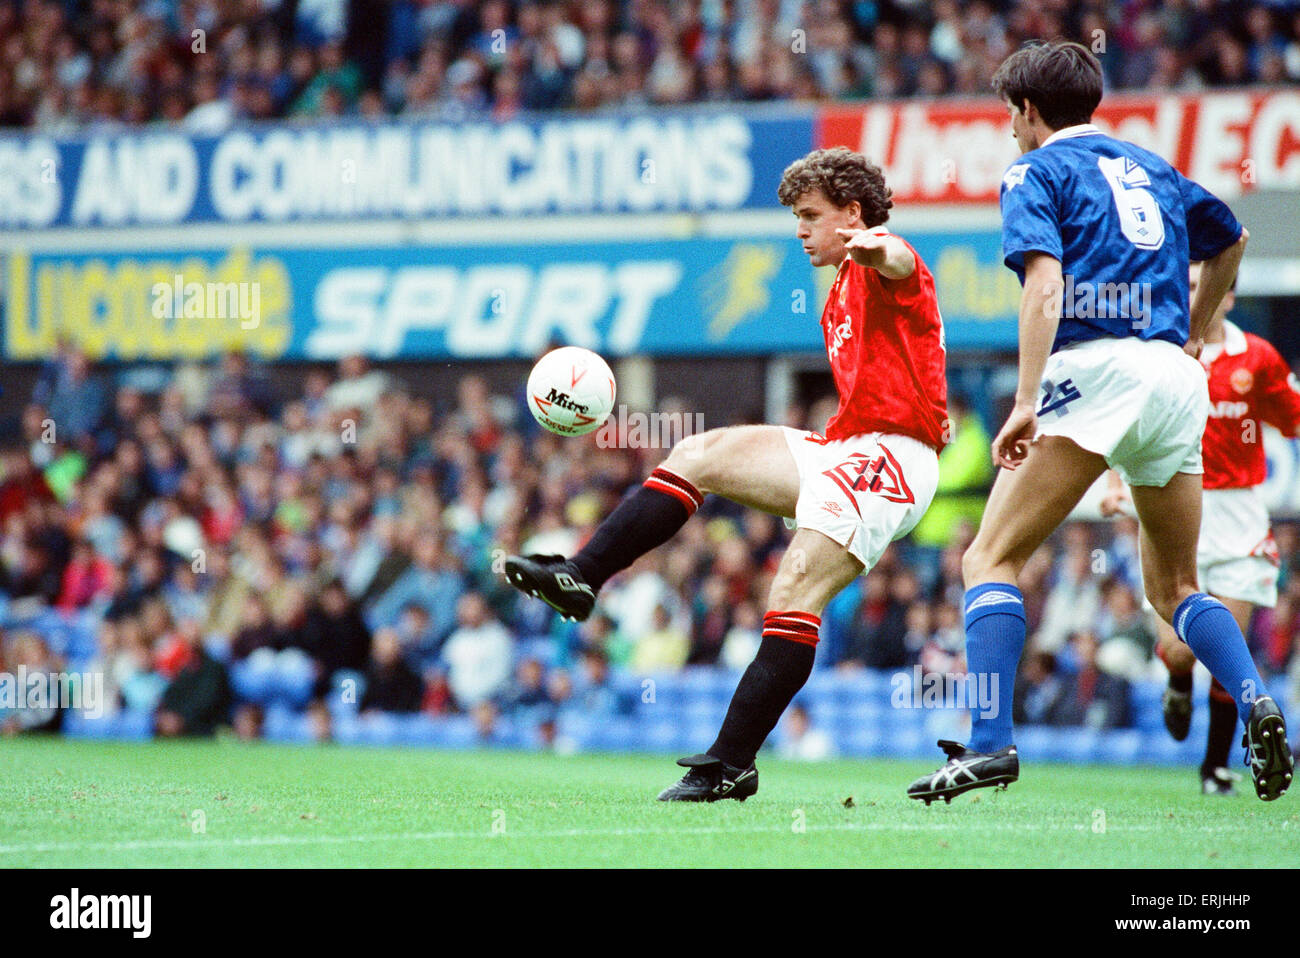 Everton 0-2 Manchester United, partido de liga en Goodison Park, el sábado 12 de septiembre de 1992. Mark Hughes & Gary Ablett. Foto de stock